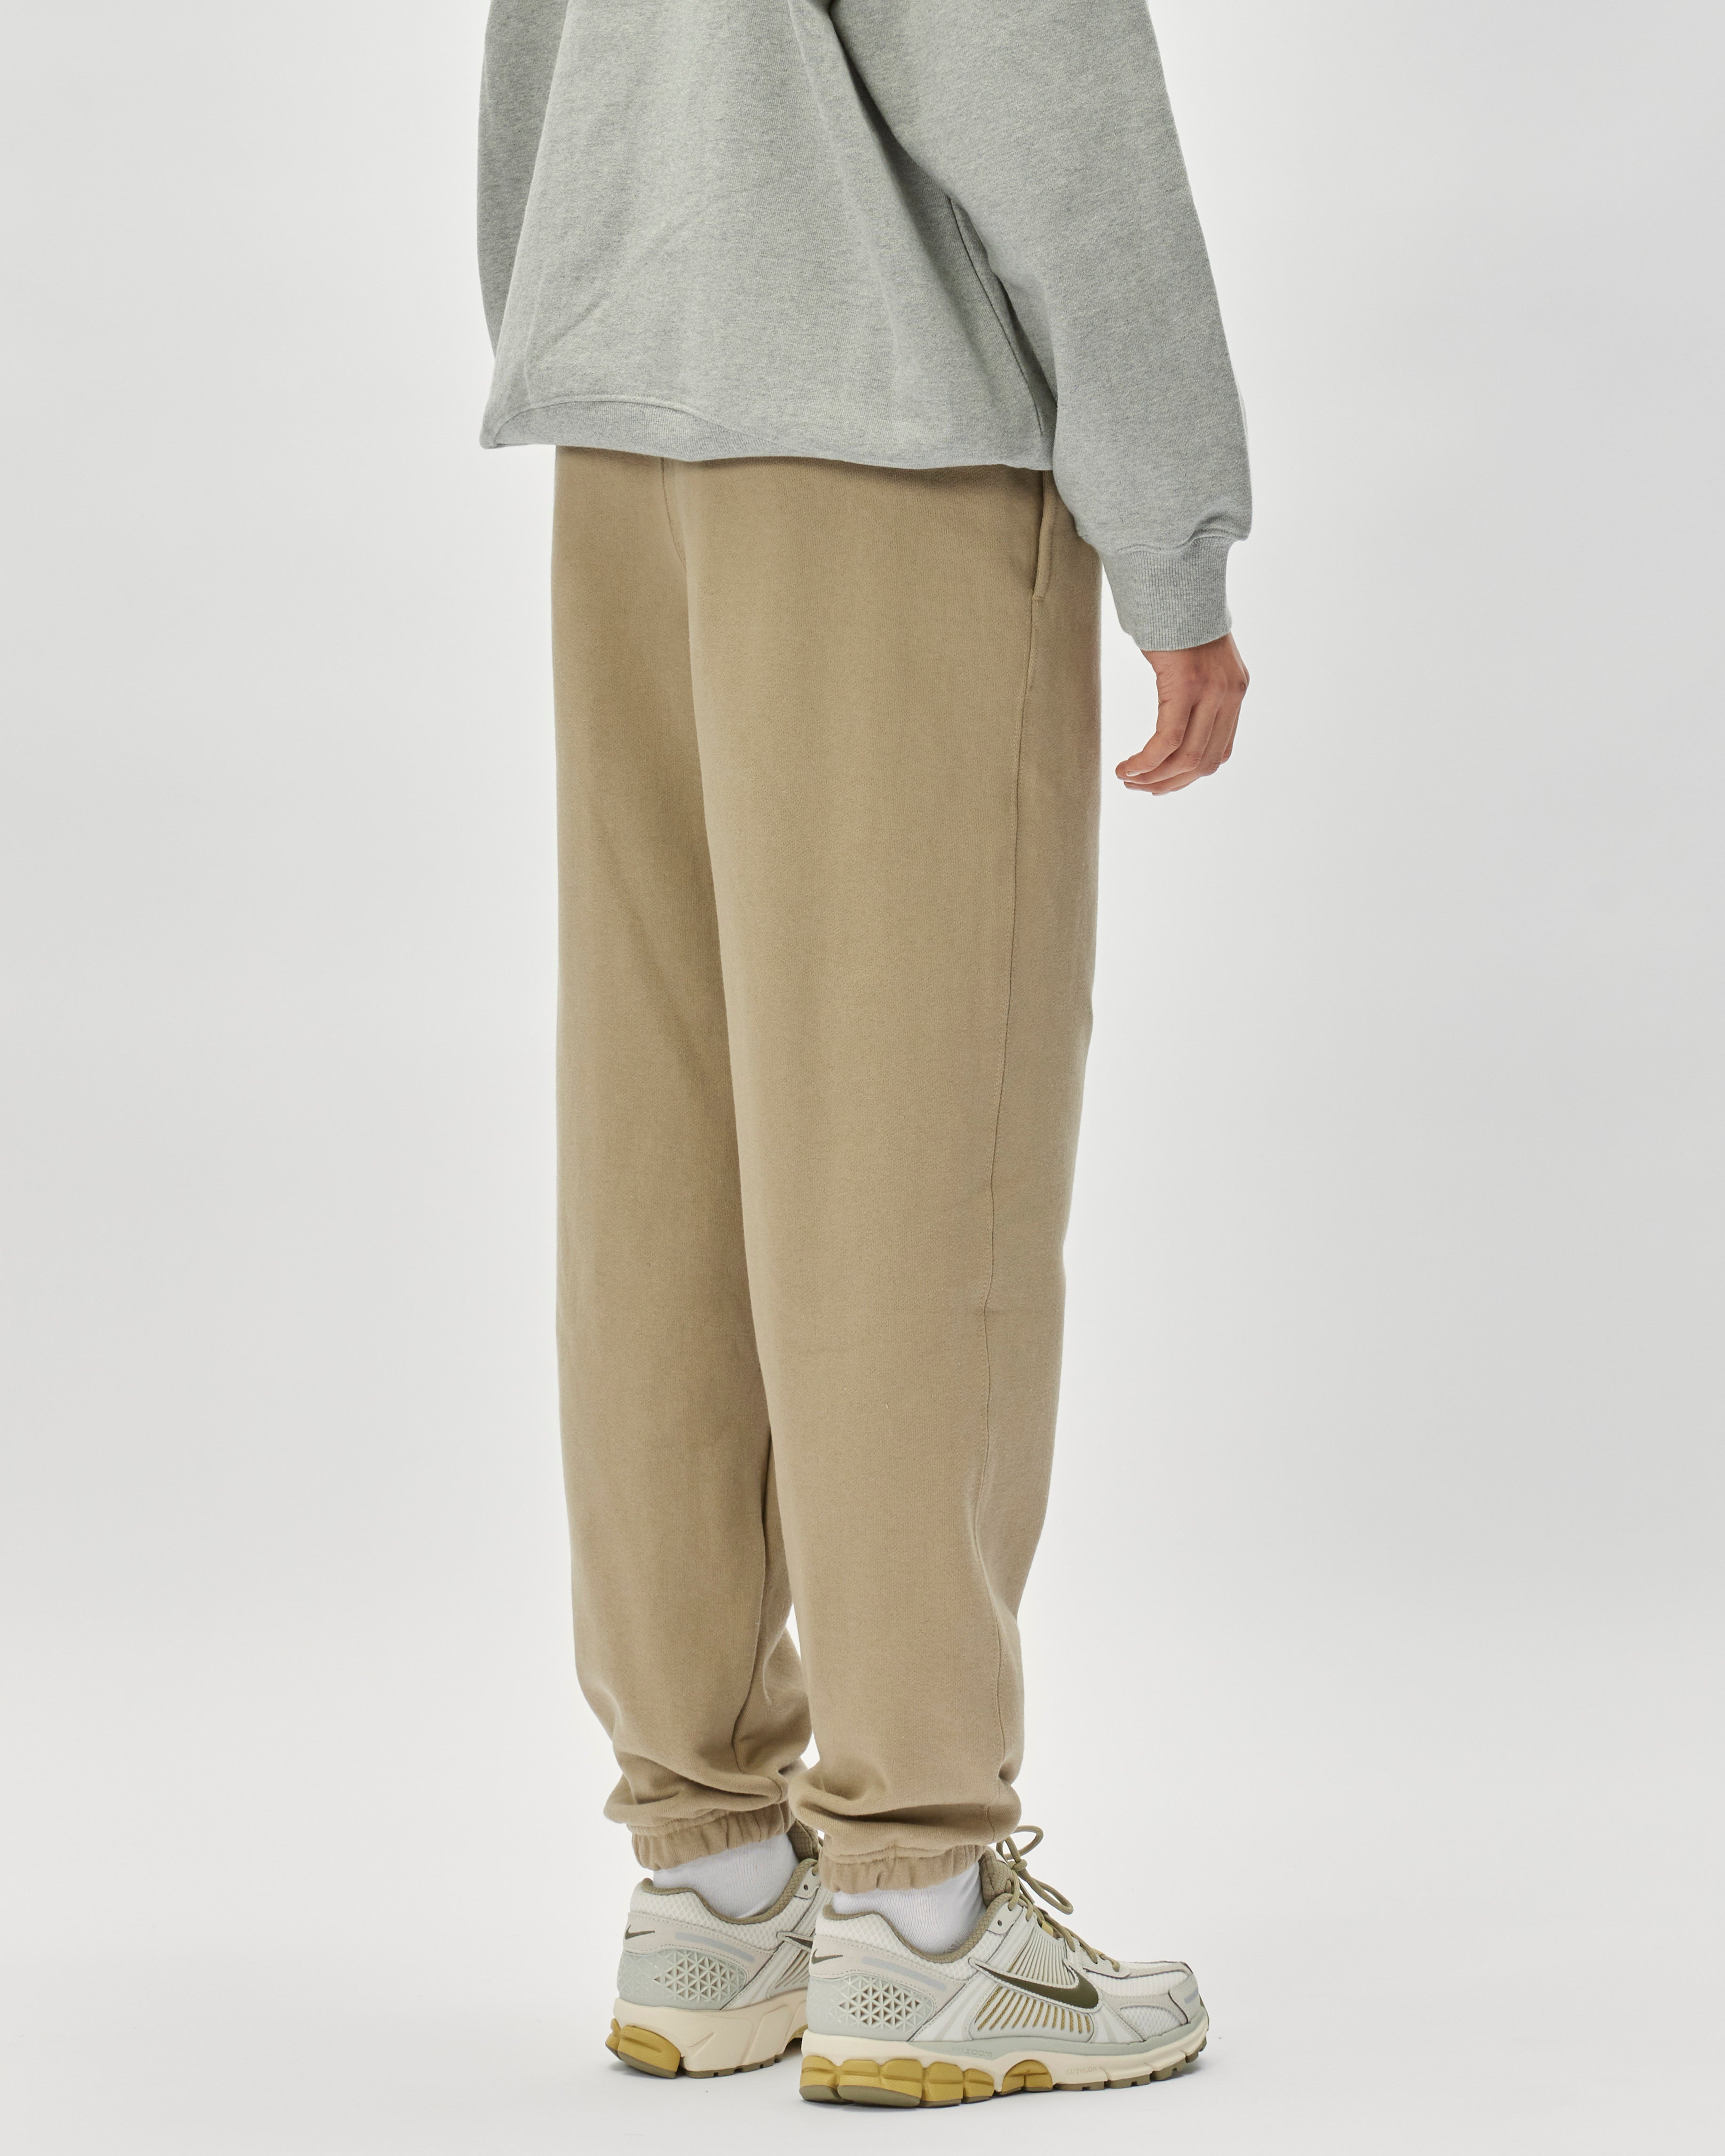 Nike 'Made in the USA' Fleece Pants KHAKI/WHITE DH5050-247